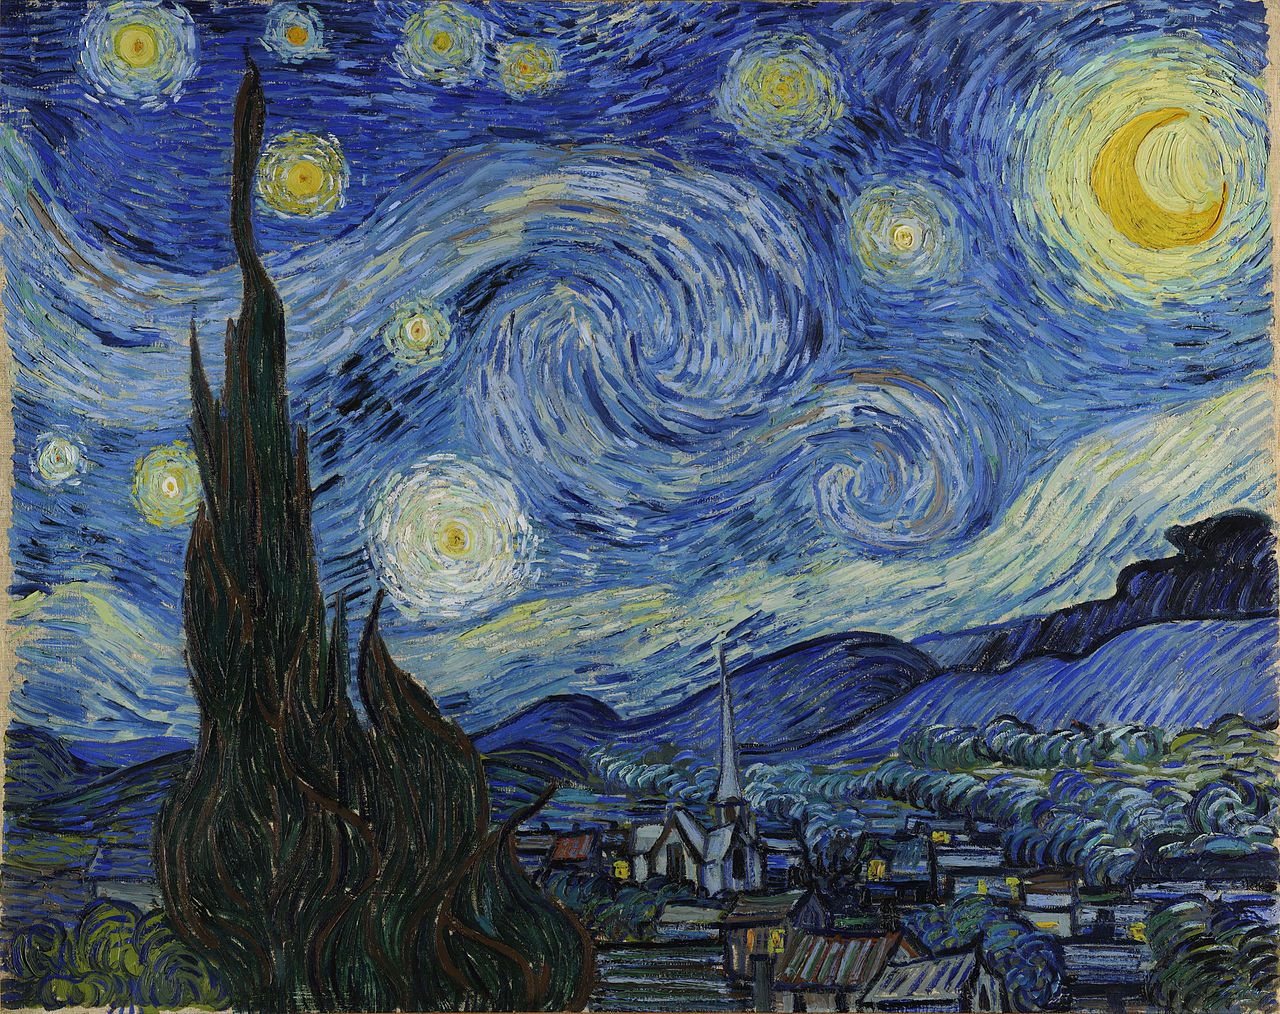 Image:GoghStarryNight.jpg